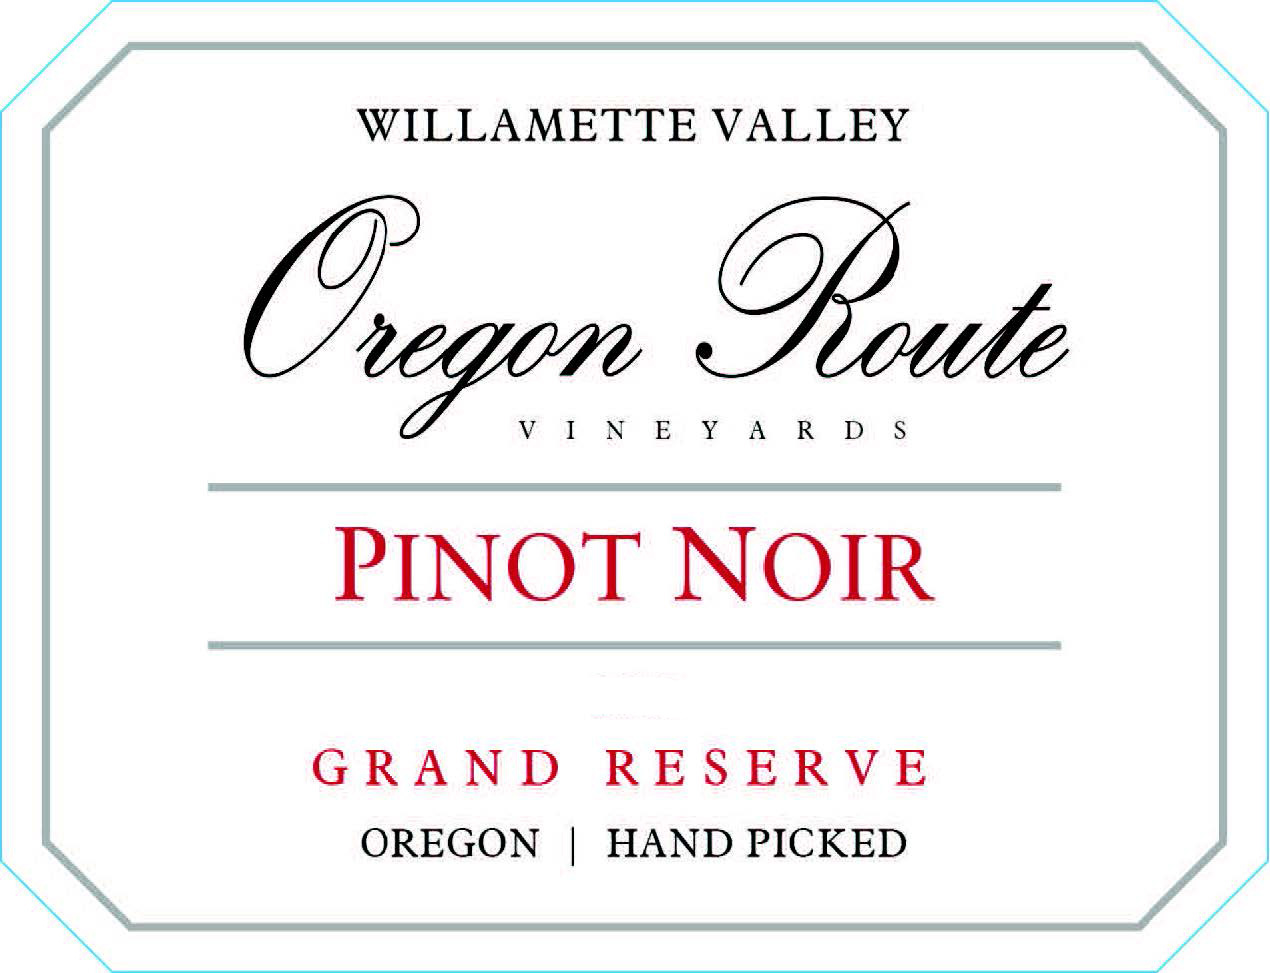 Oregon Route Vineyards - Pinot Noir - Grand Reserve label